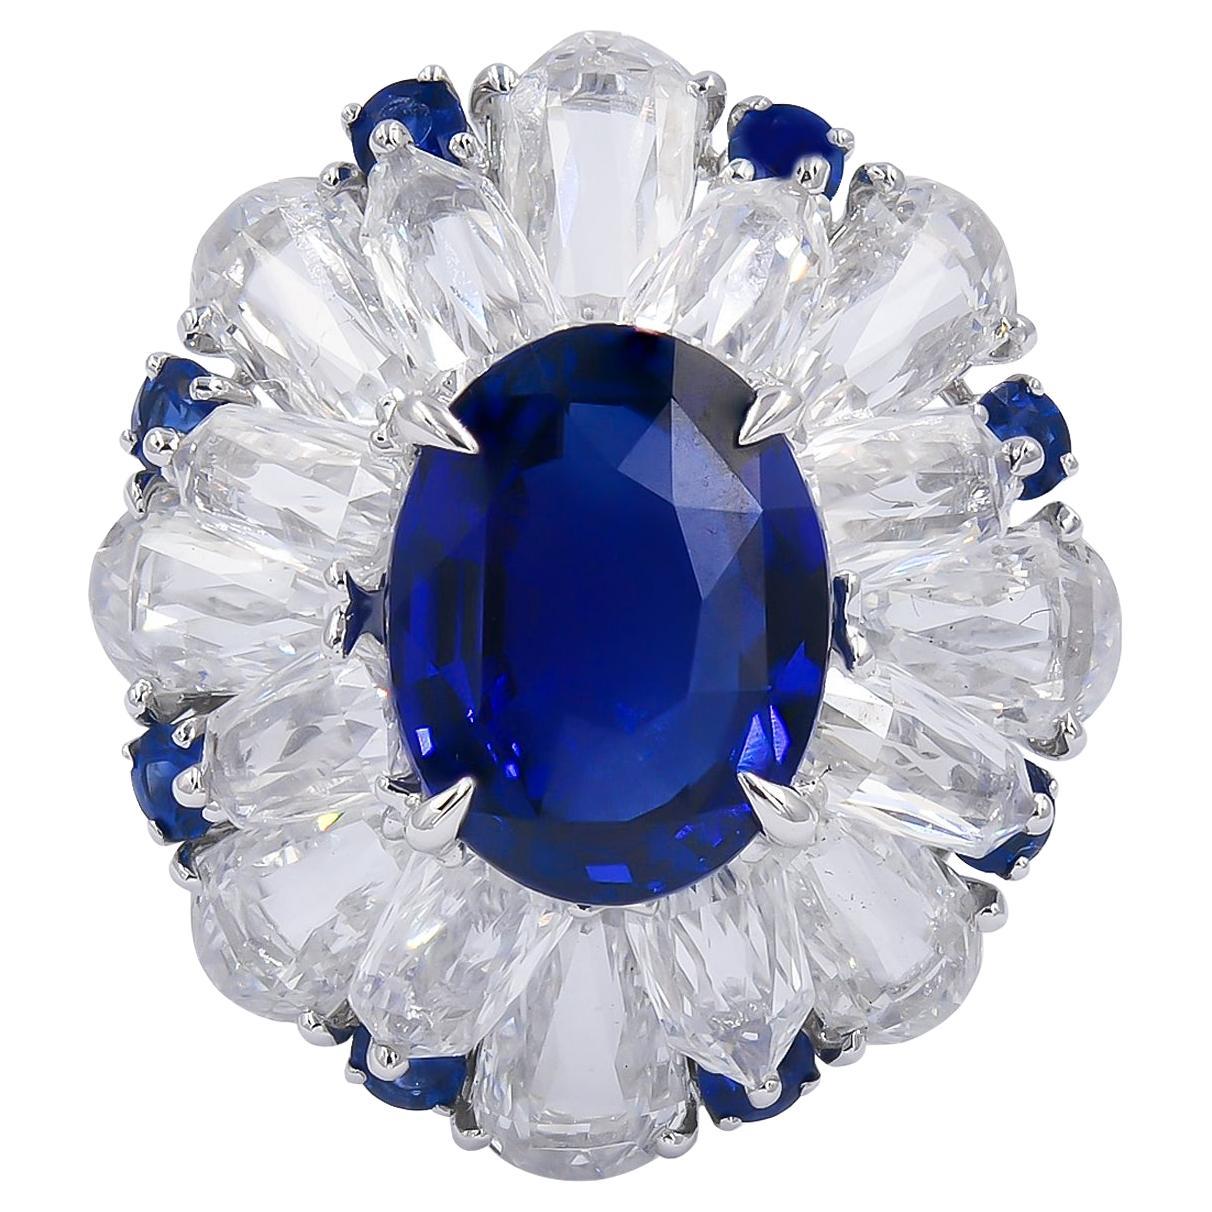 Certified 5.11 Carat Sapphire Diamond Cocktail Ring